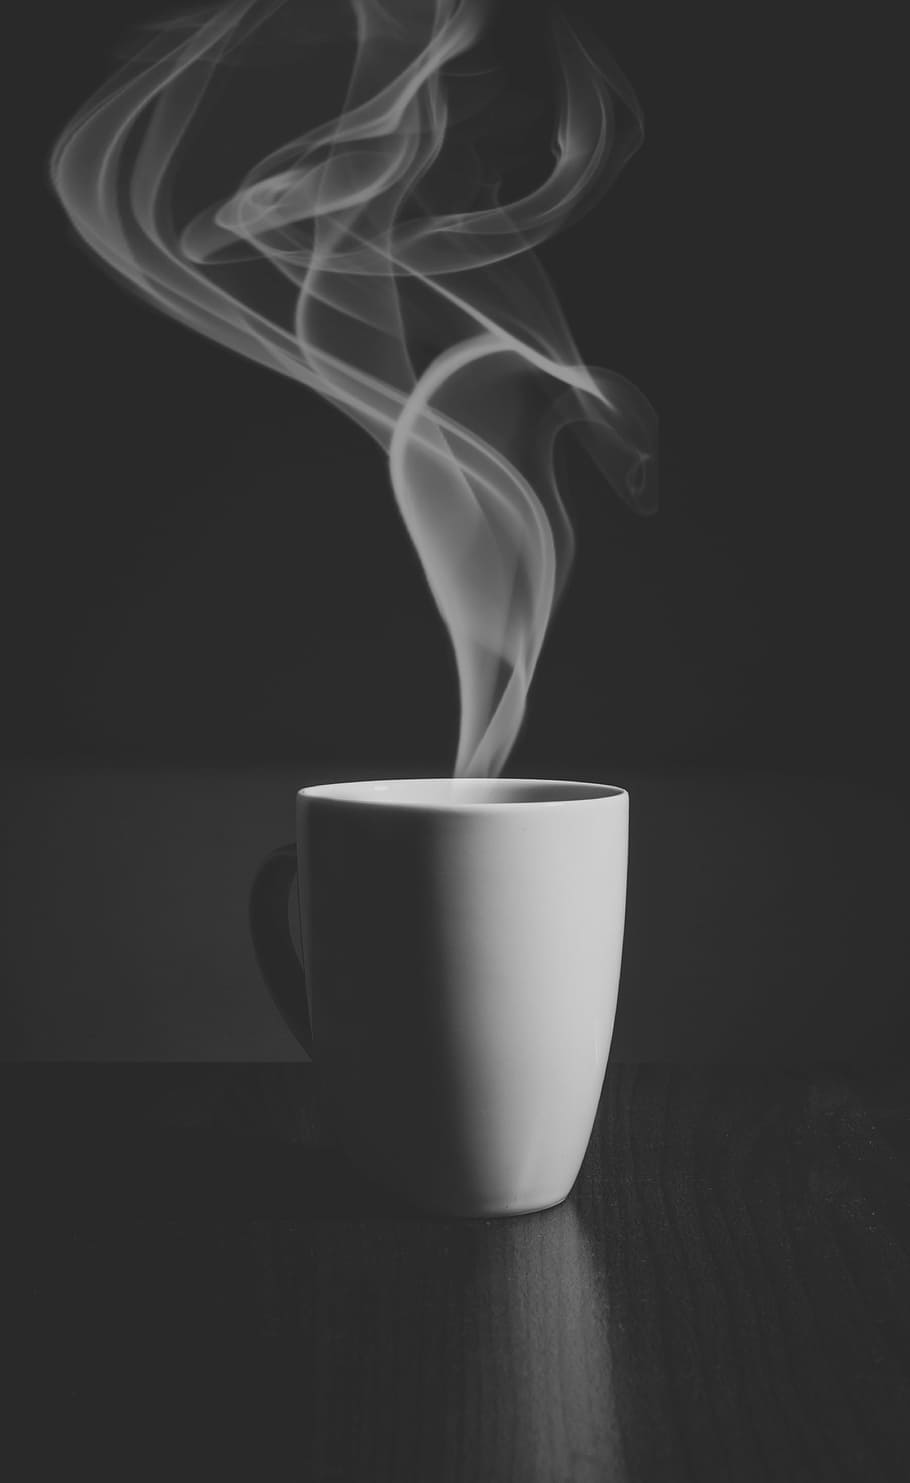 steam, going, mug grayscale photo, coffee, mocha, espresso, cappuccino, beverage, drink, cup